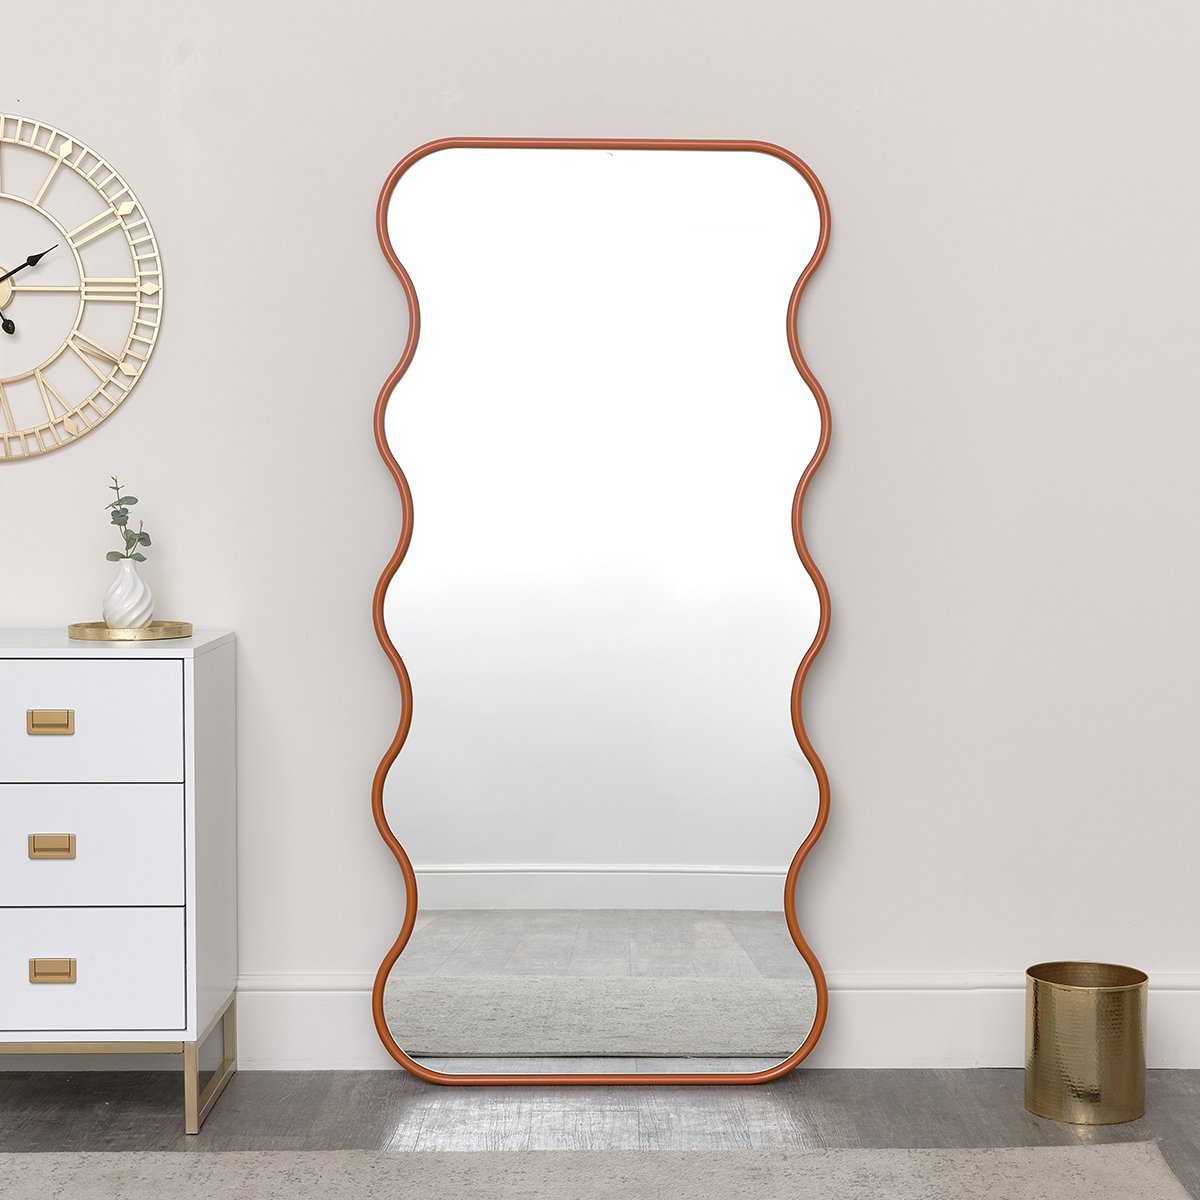 Orange Full Length Wave Mirror - 163cm x 80cm